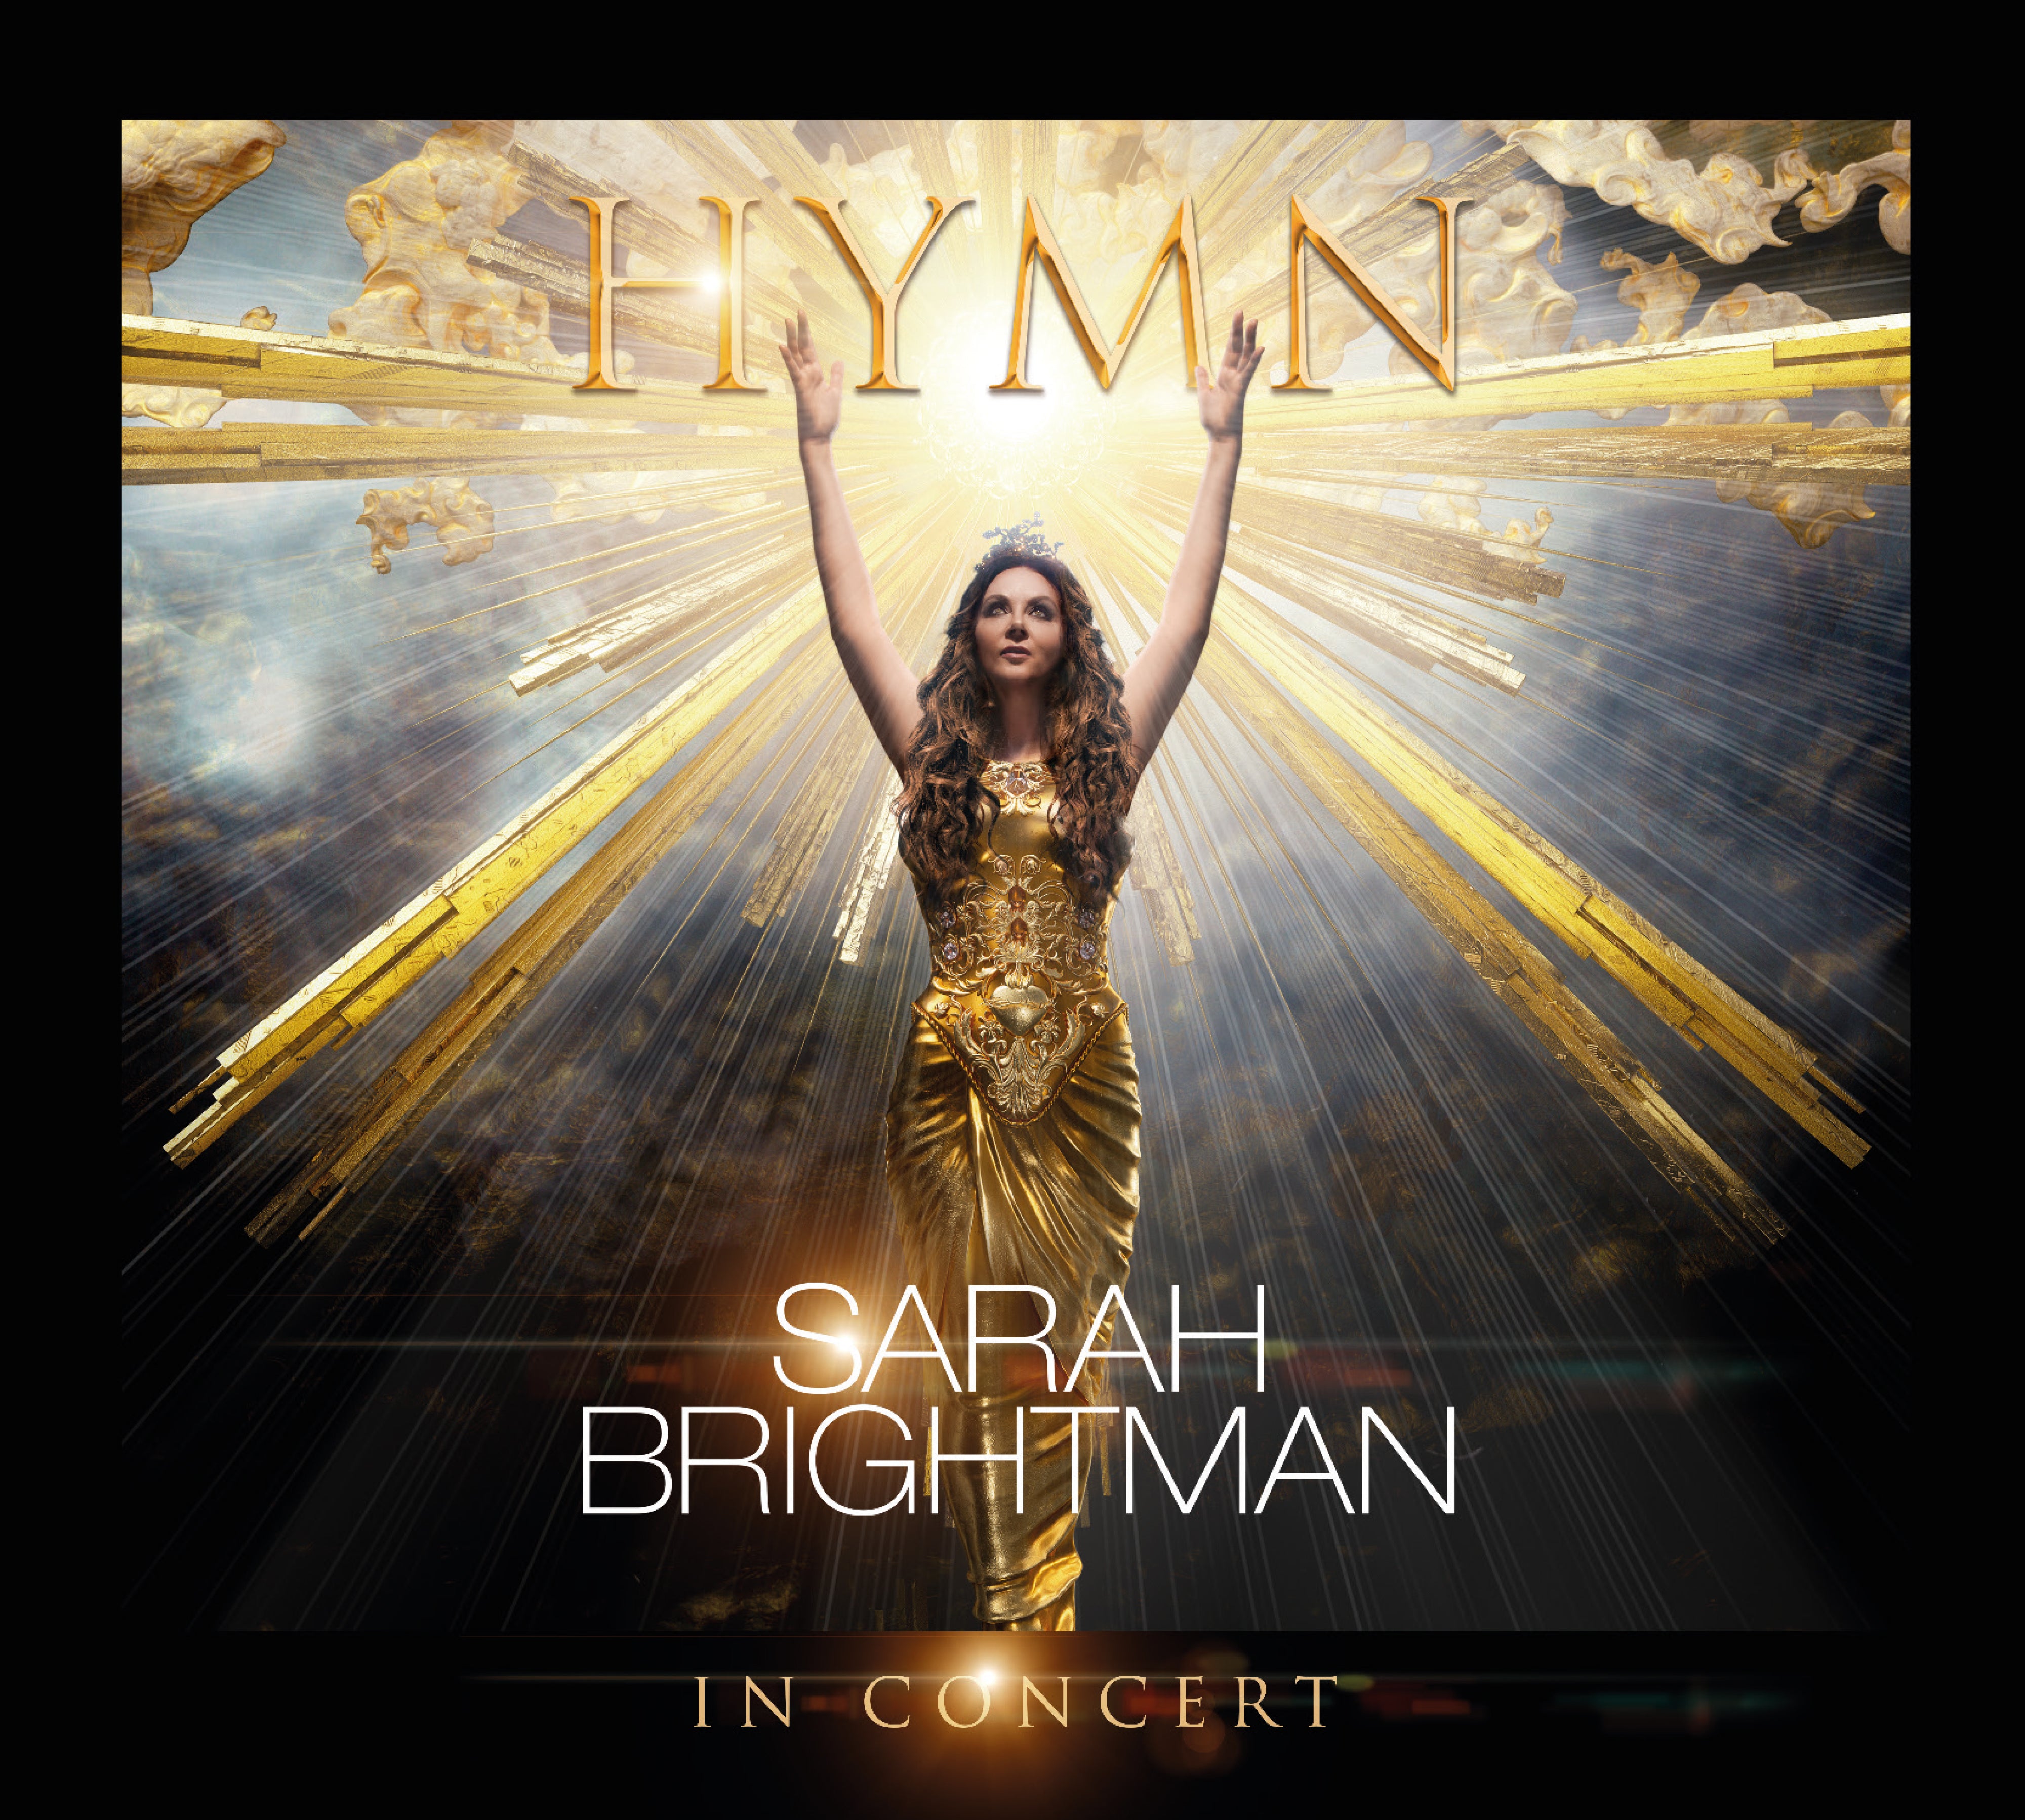 Sarah Brightman HYMN IN CONCERT Deluxe Edition DVD/CD